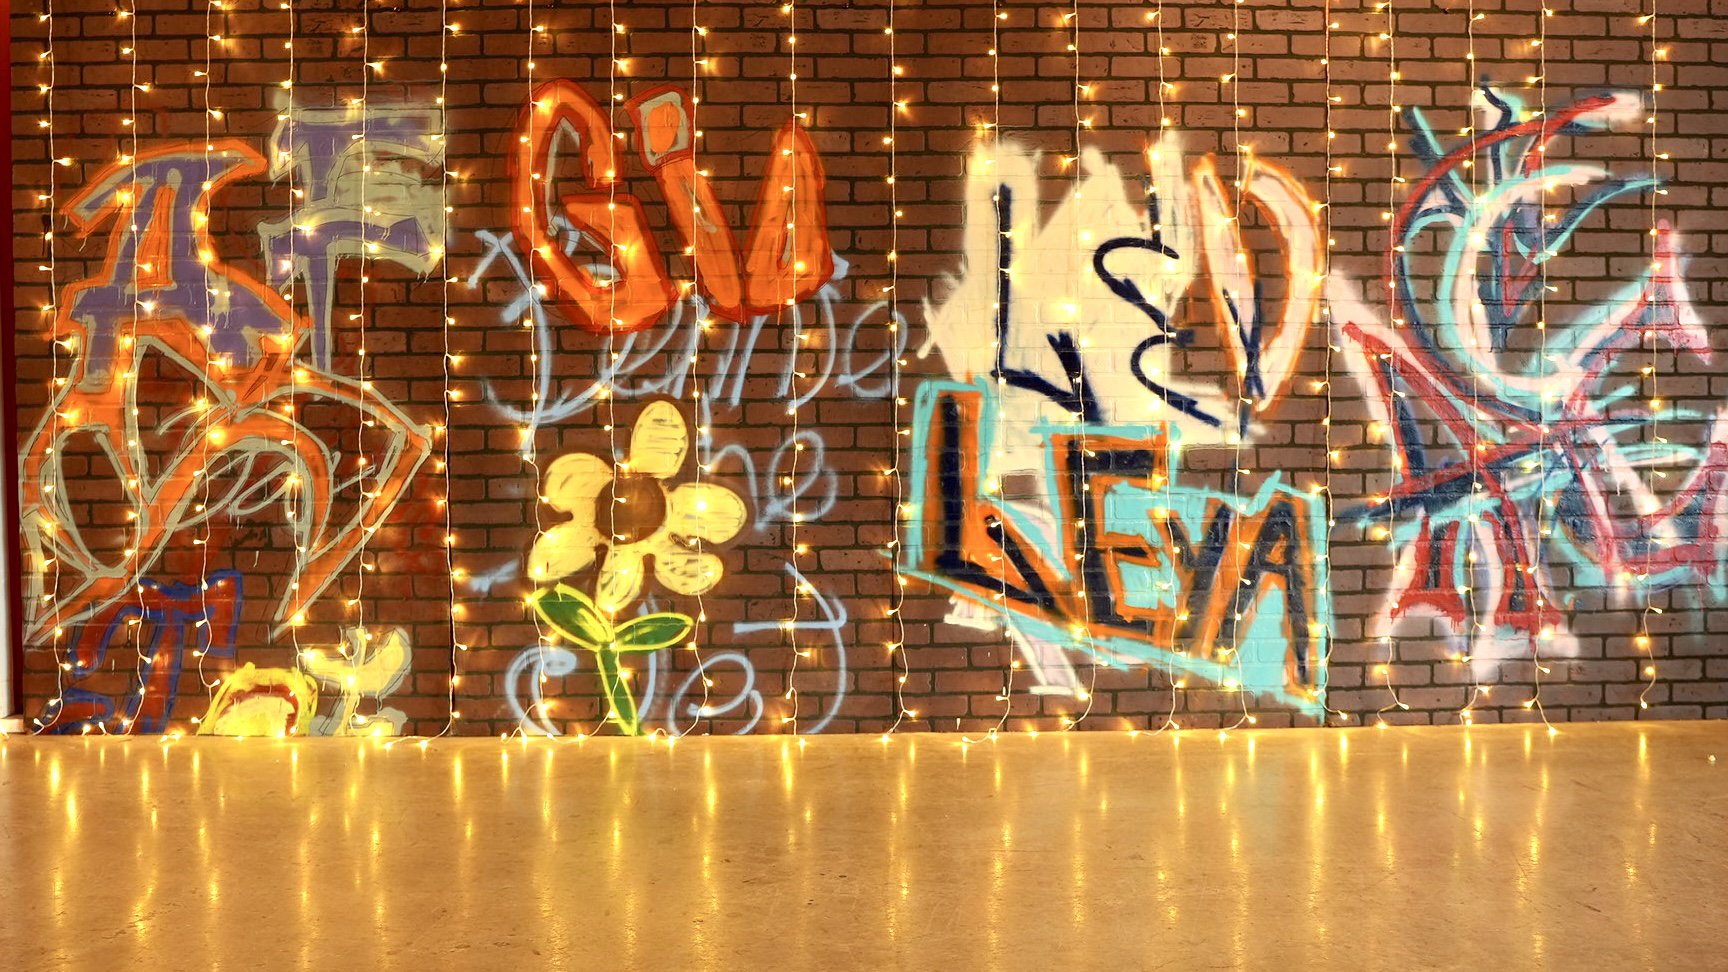 Detail of a graffiti art installation at La Casita